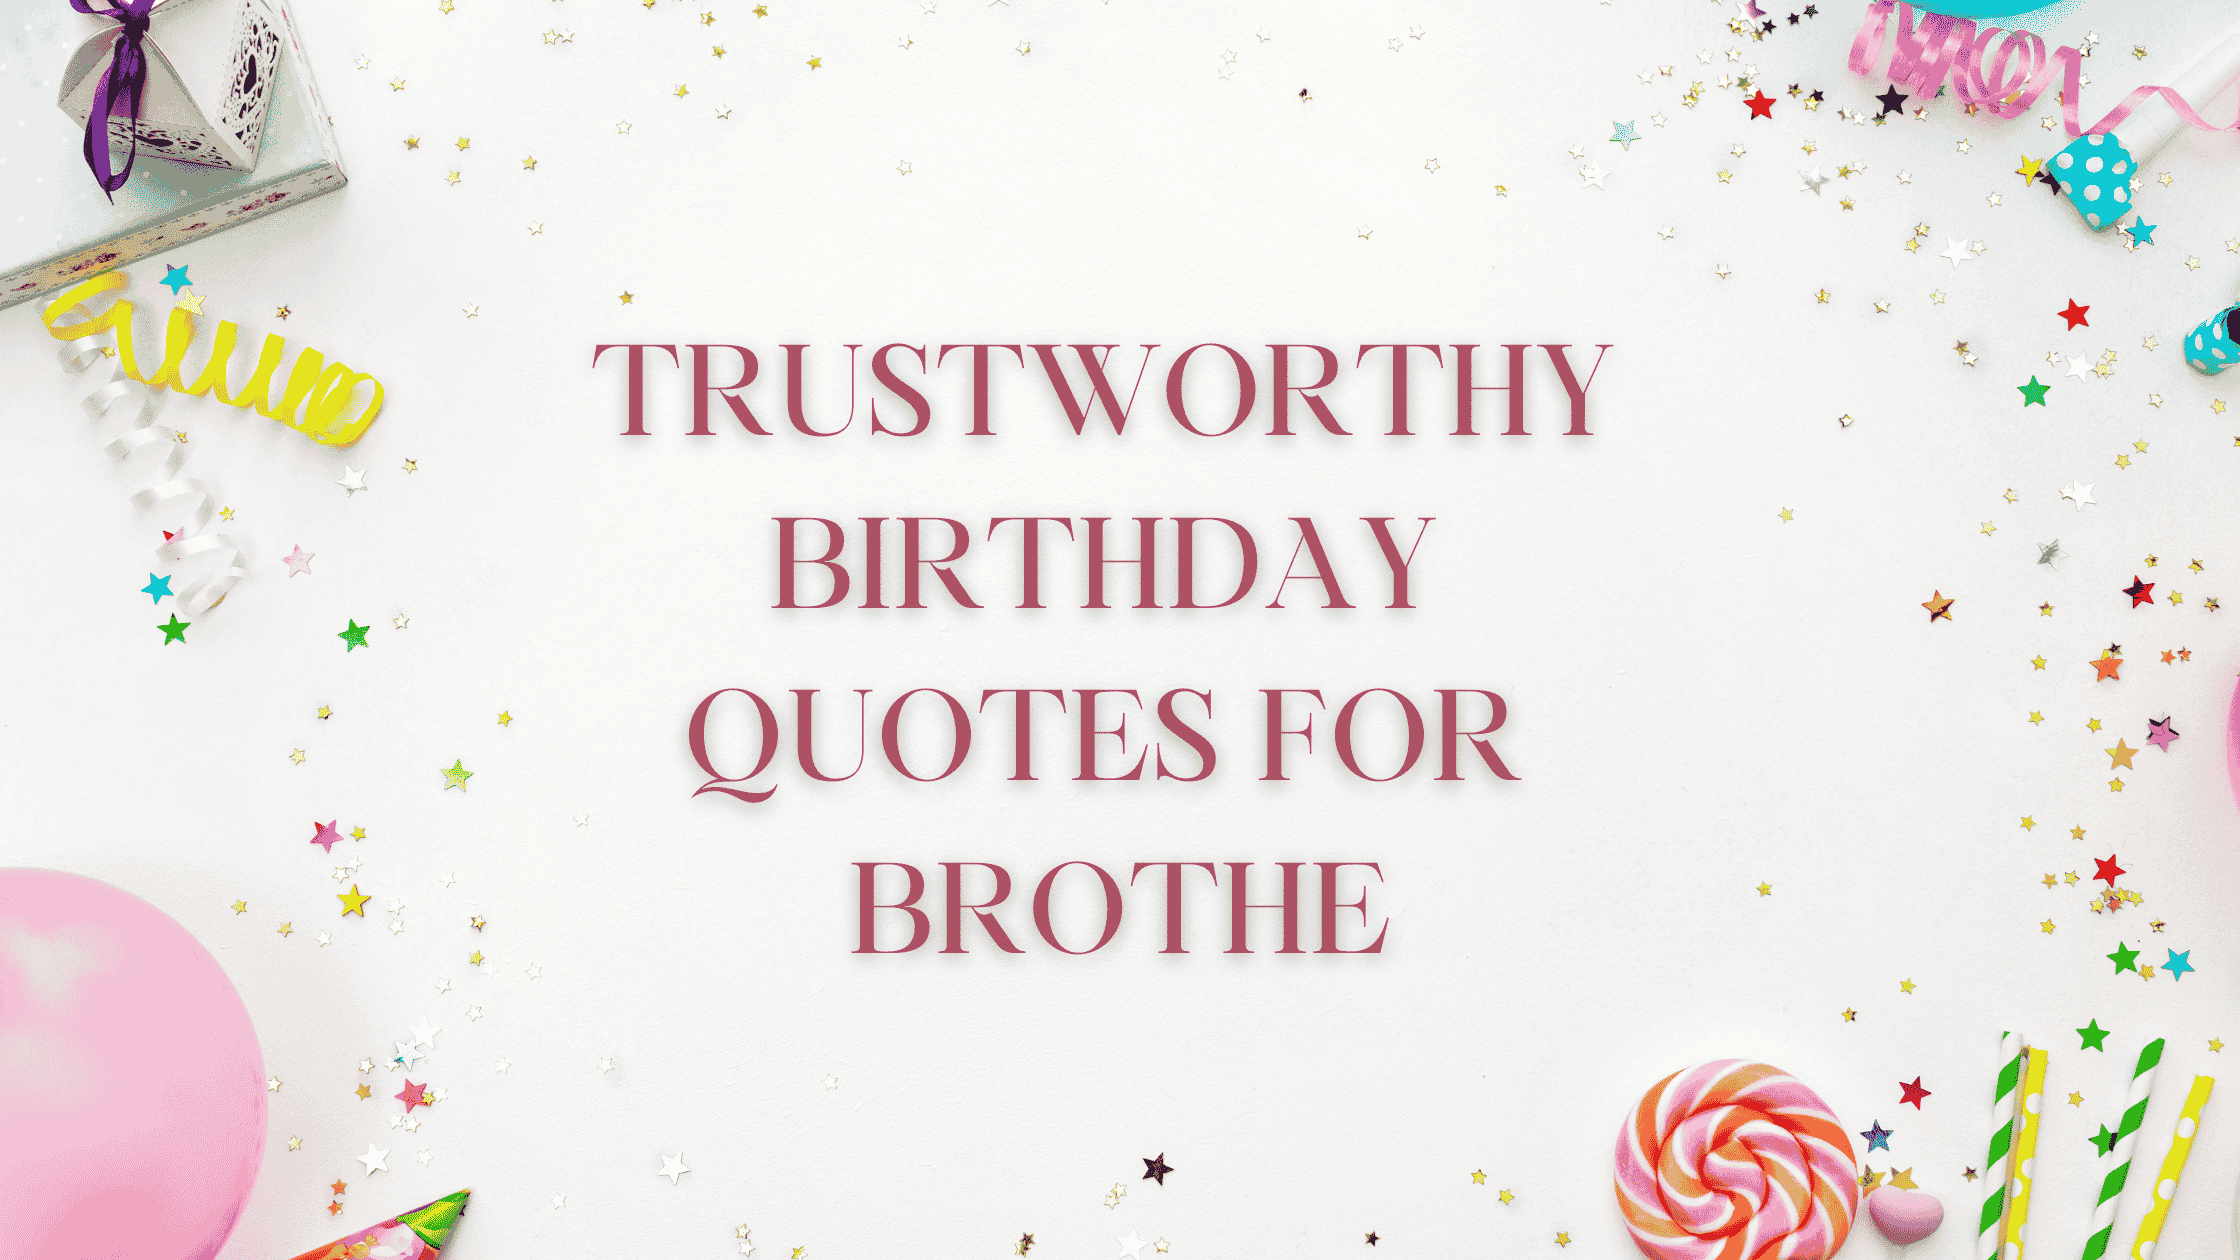 Trustworthy Birthday Quotes Brother